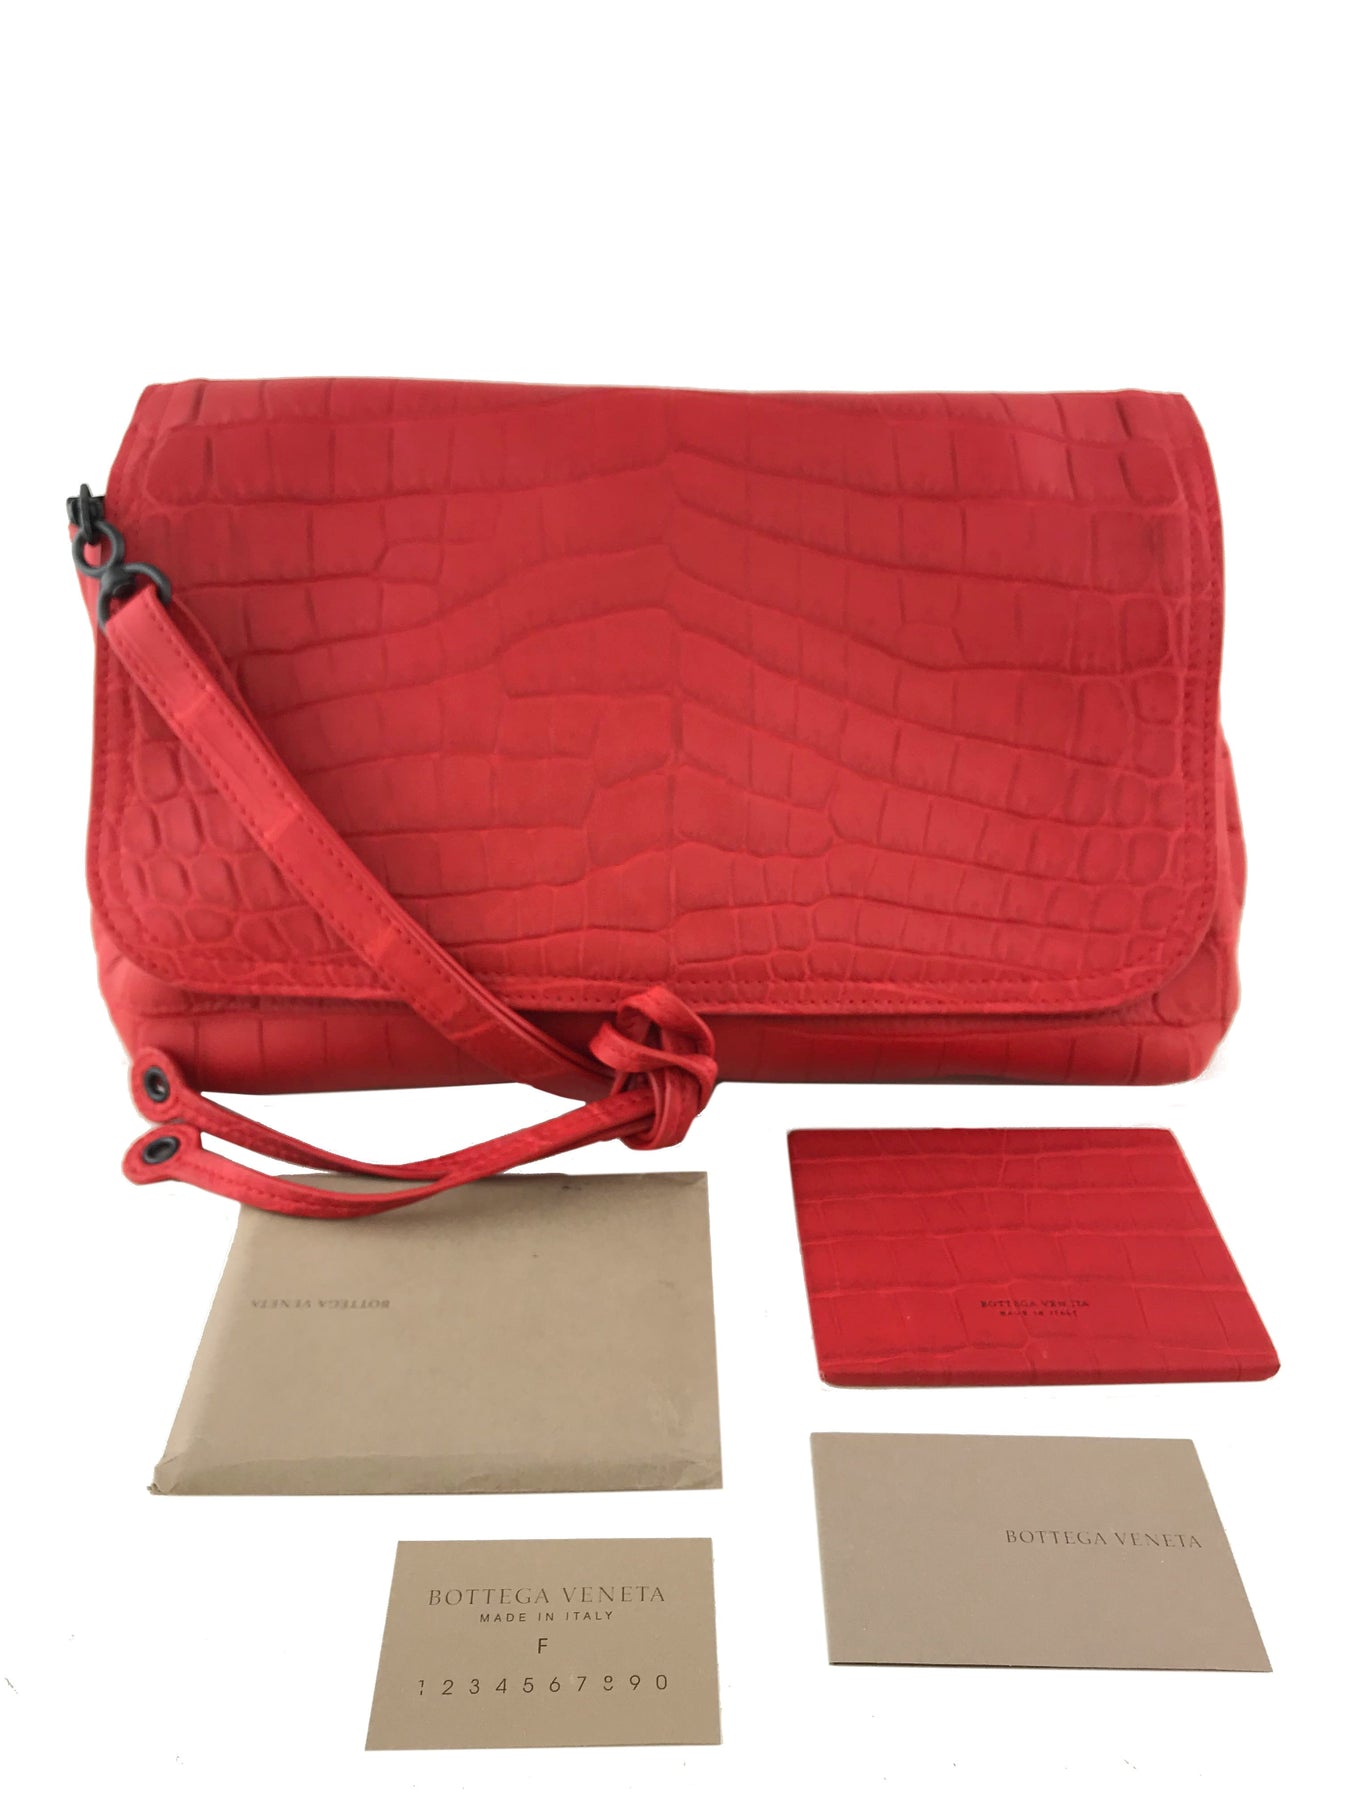 Bottega Veneta Crocodile Large Flap Bag with Shoulder Strap